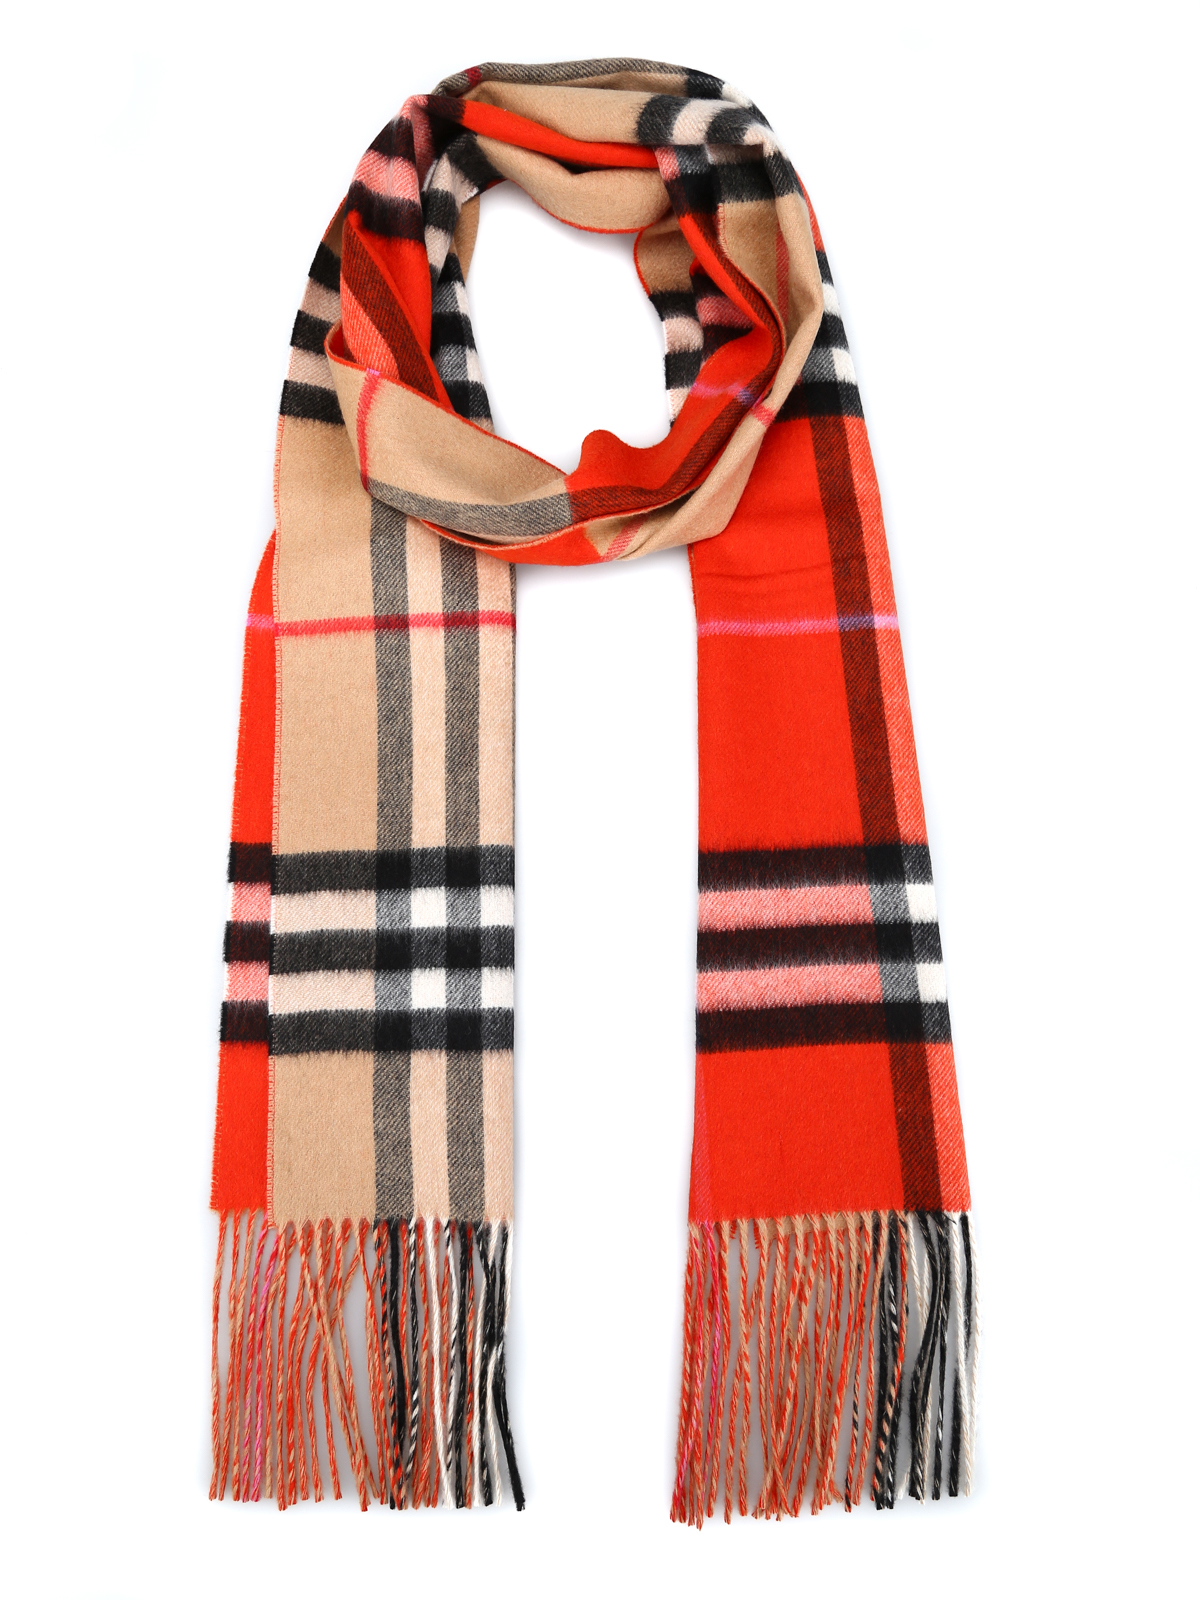 burberry orange scarf